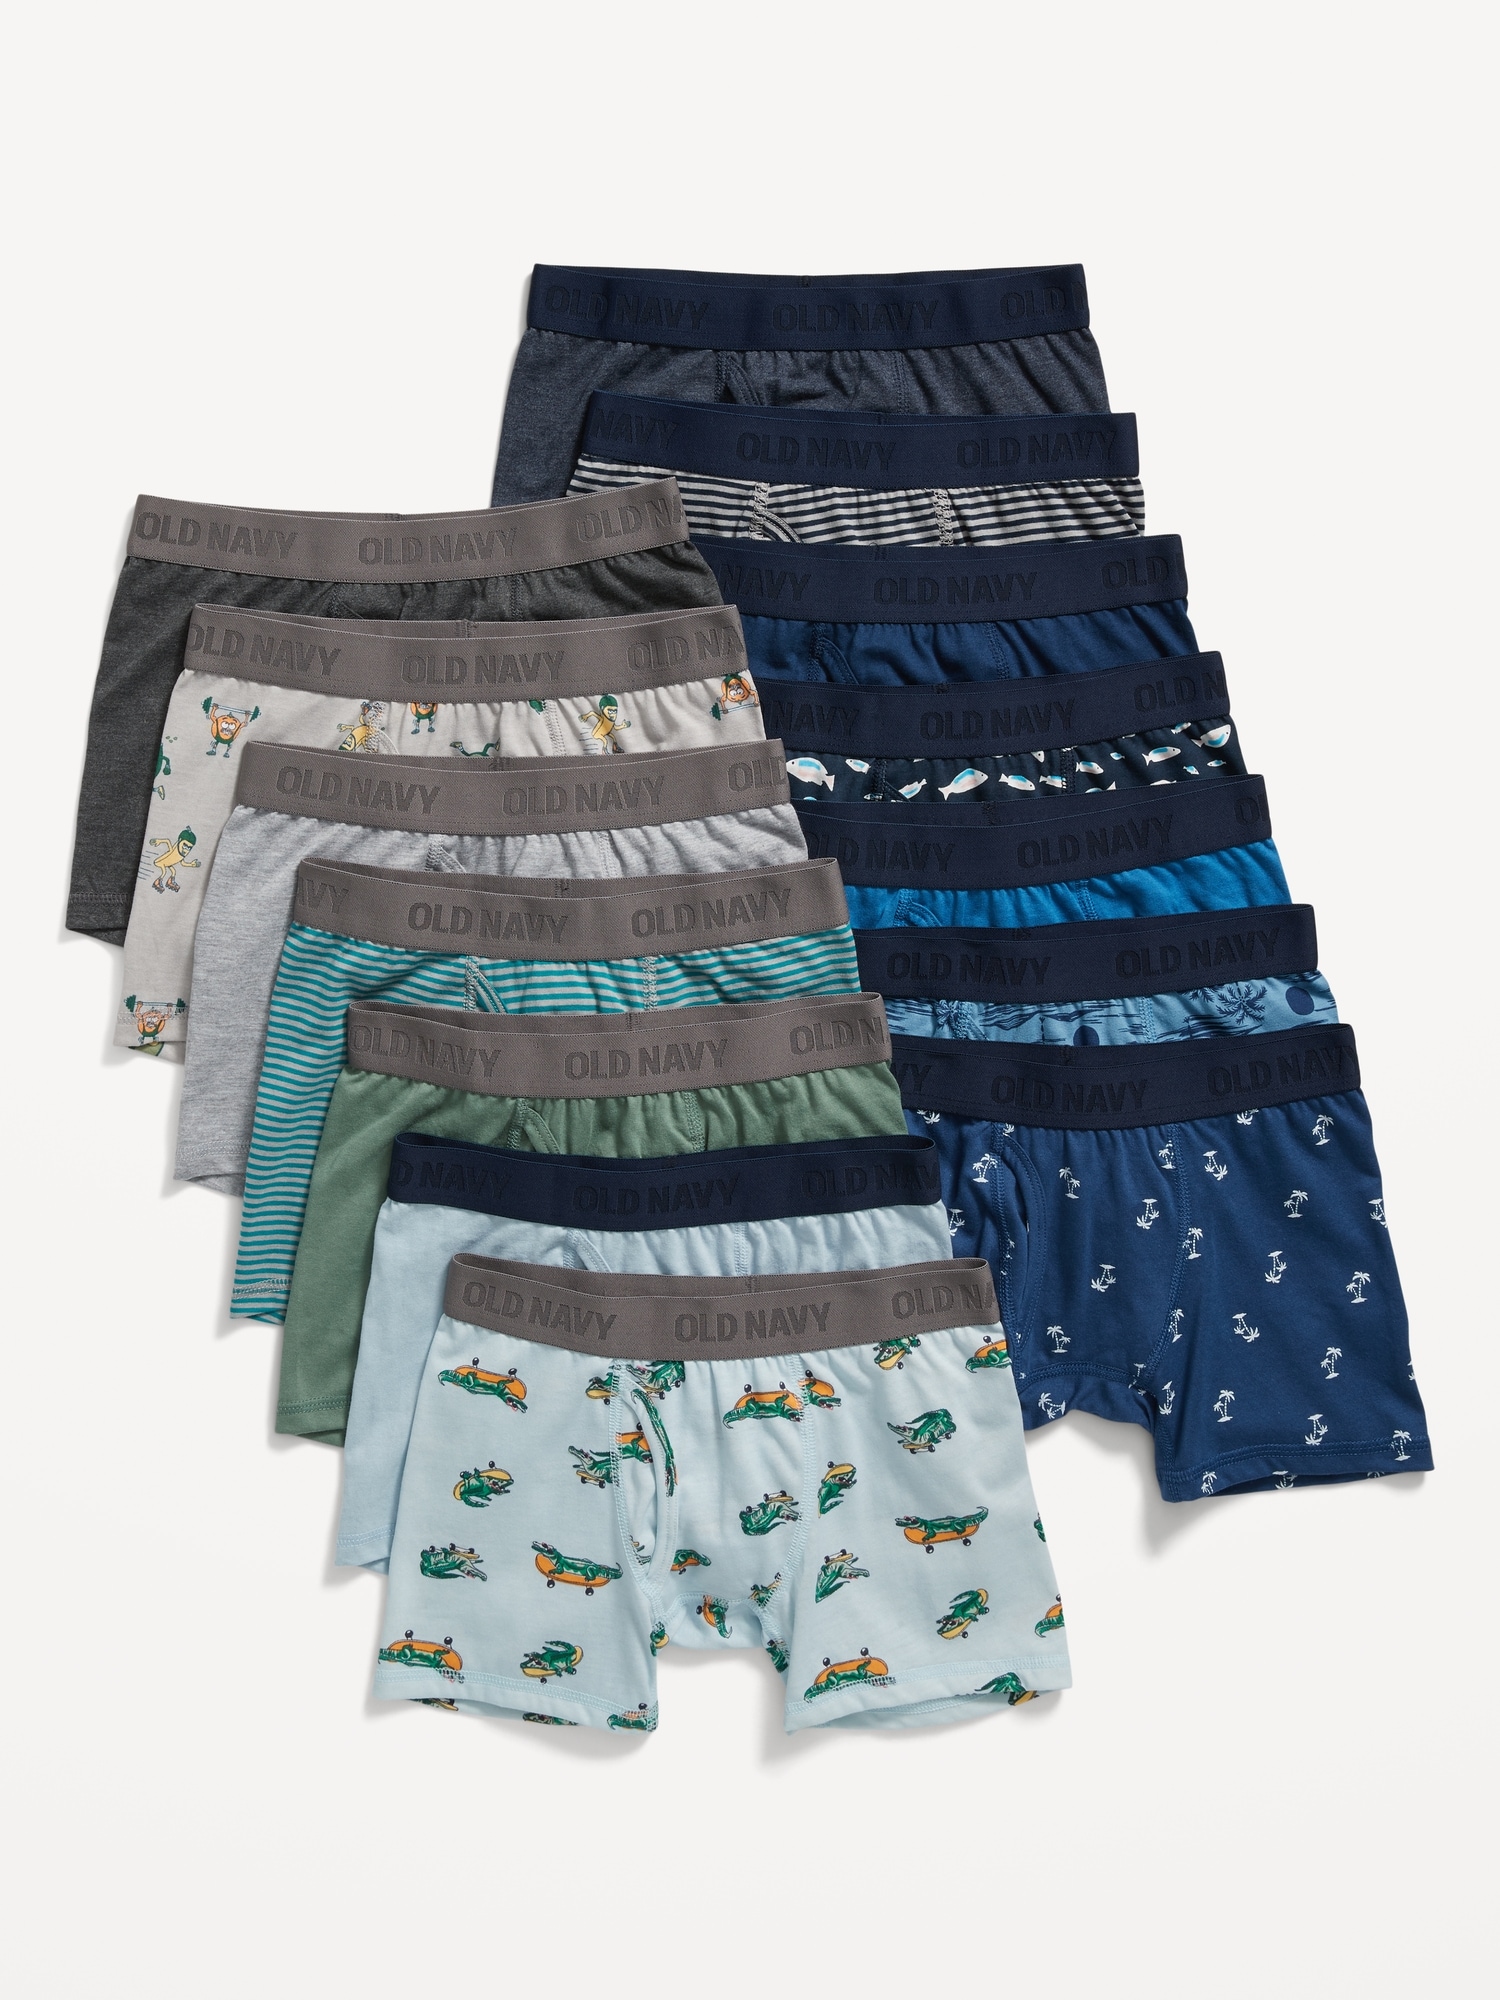 Old Navy Boxer-Briefs Underwear Variety 14-Pack for Boys blue. 1